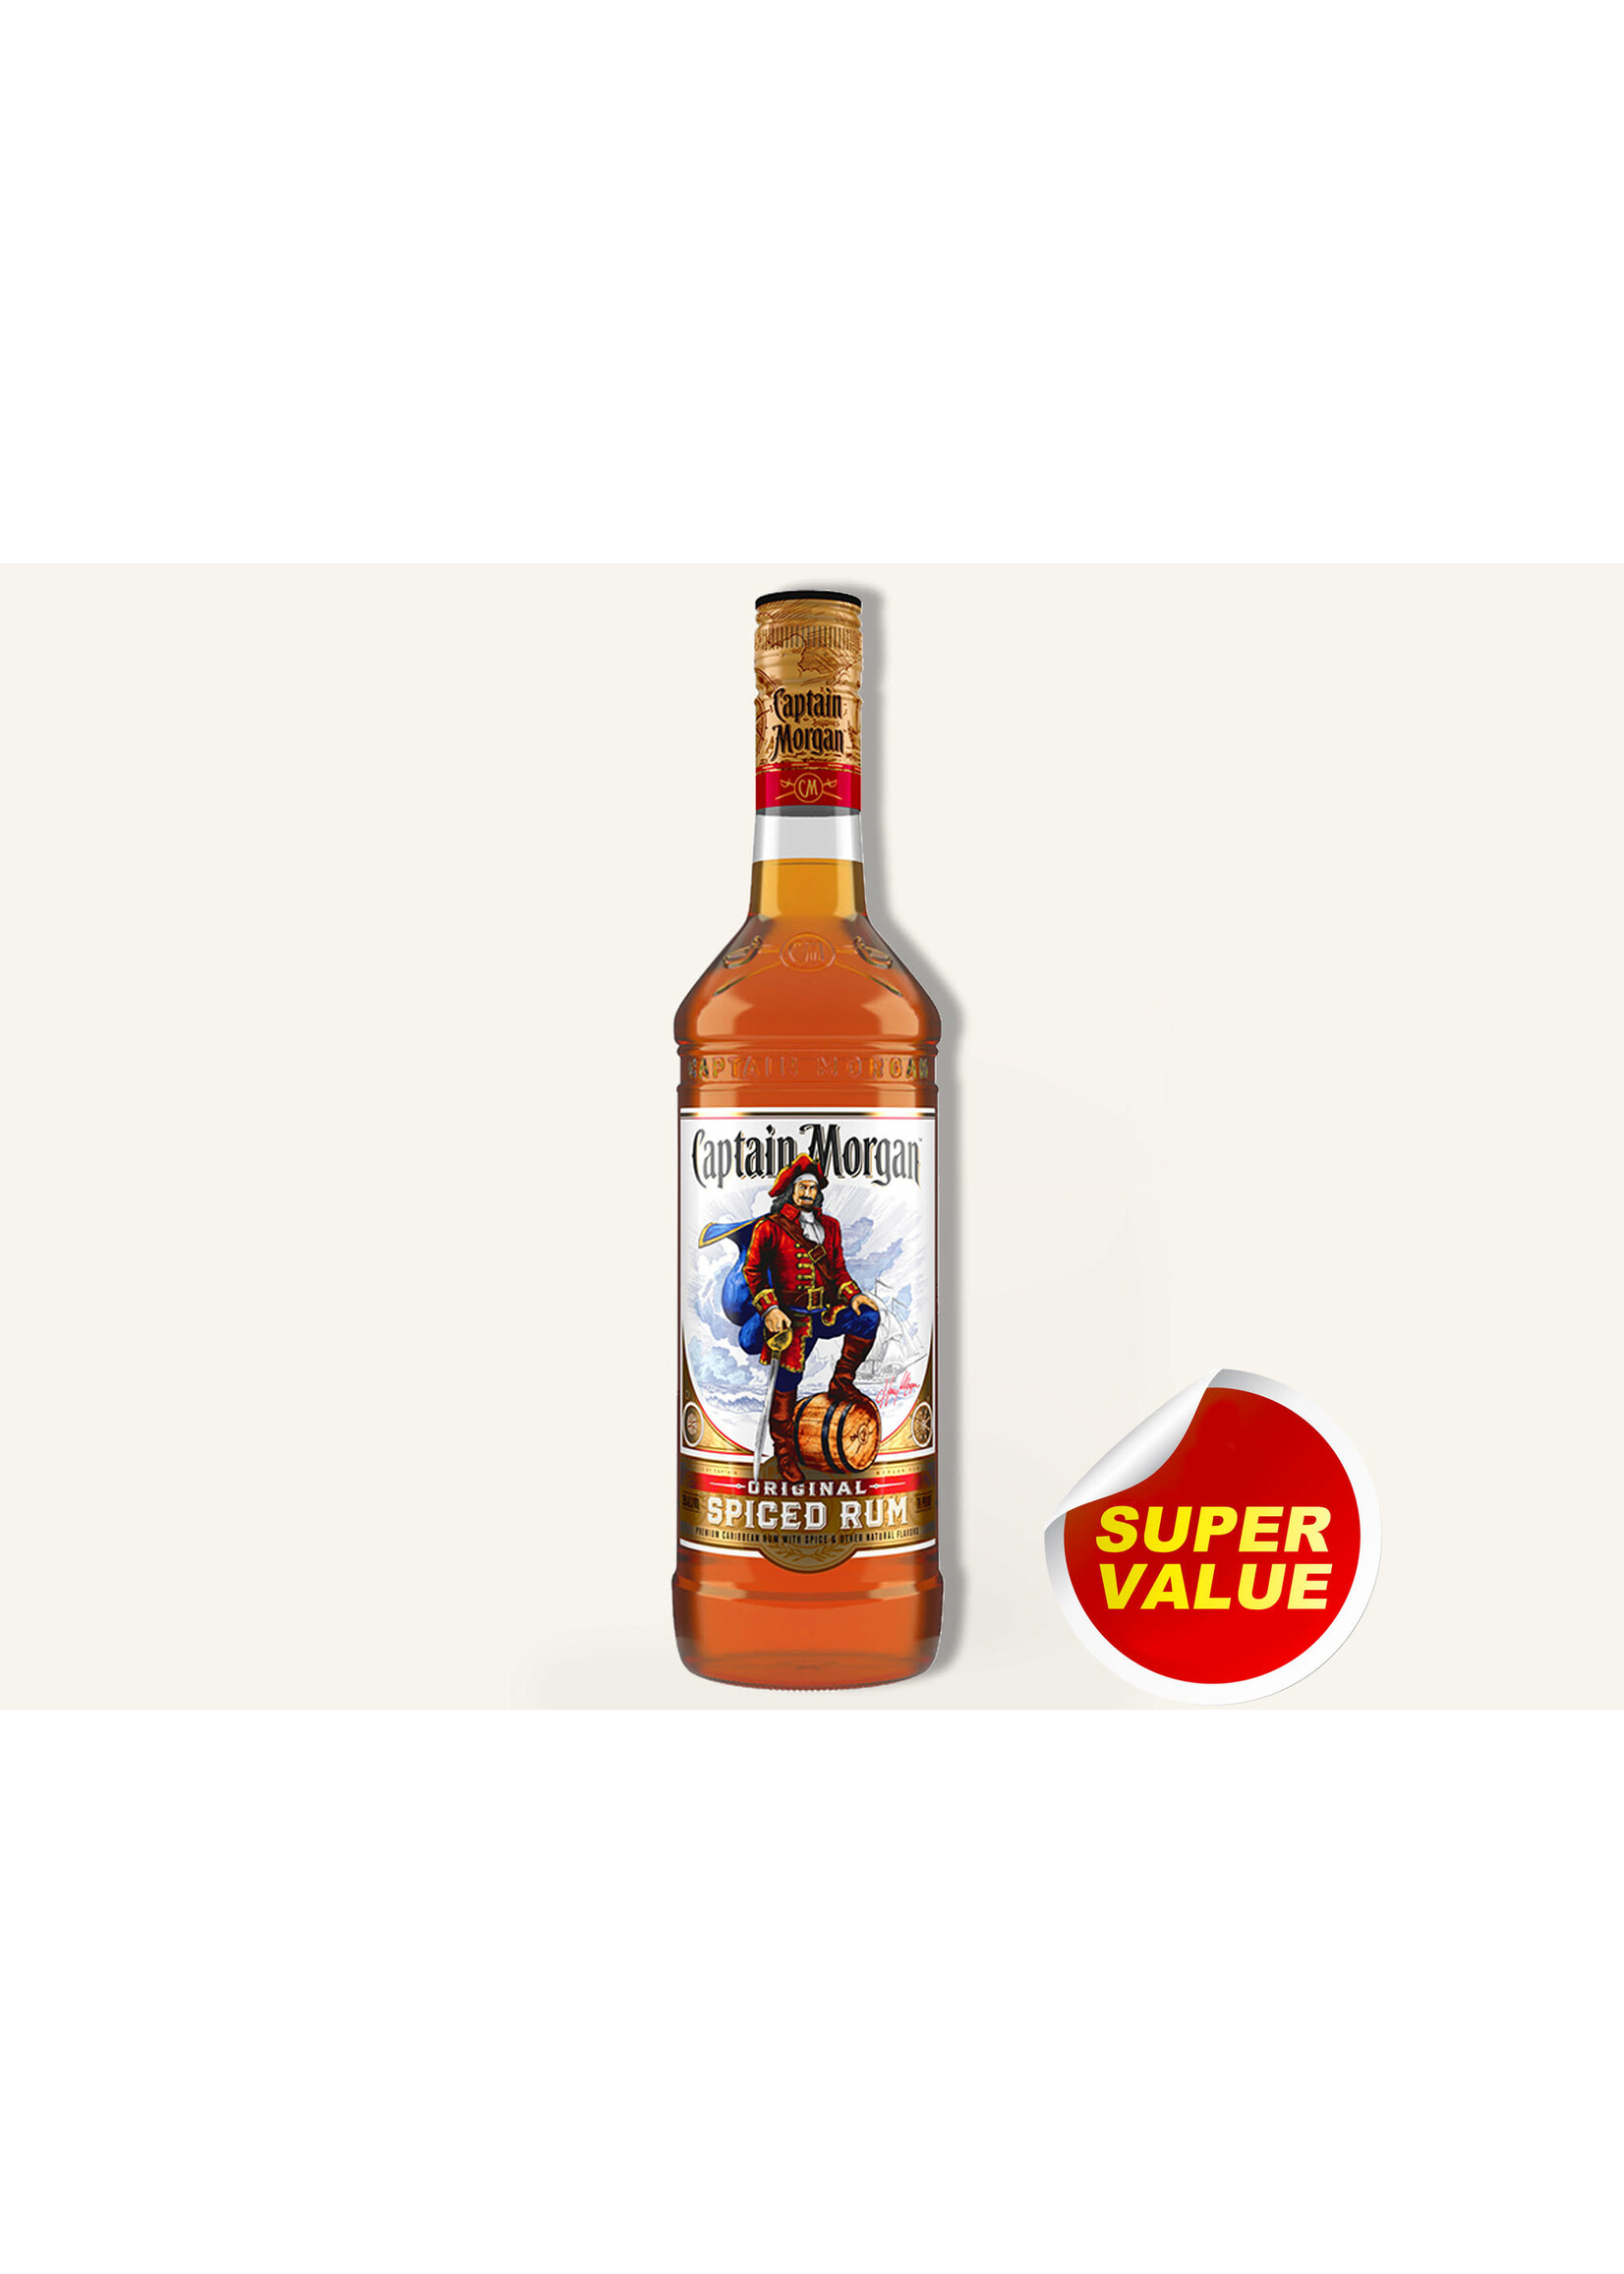 Captain Morgan Original Spiced Rum 70Proof 750ml